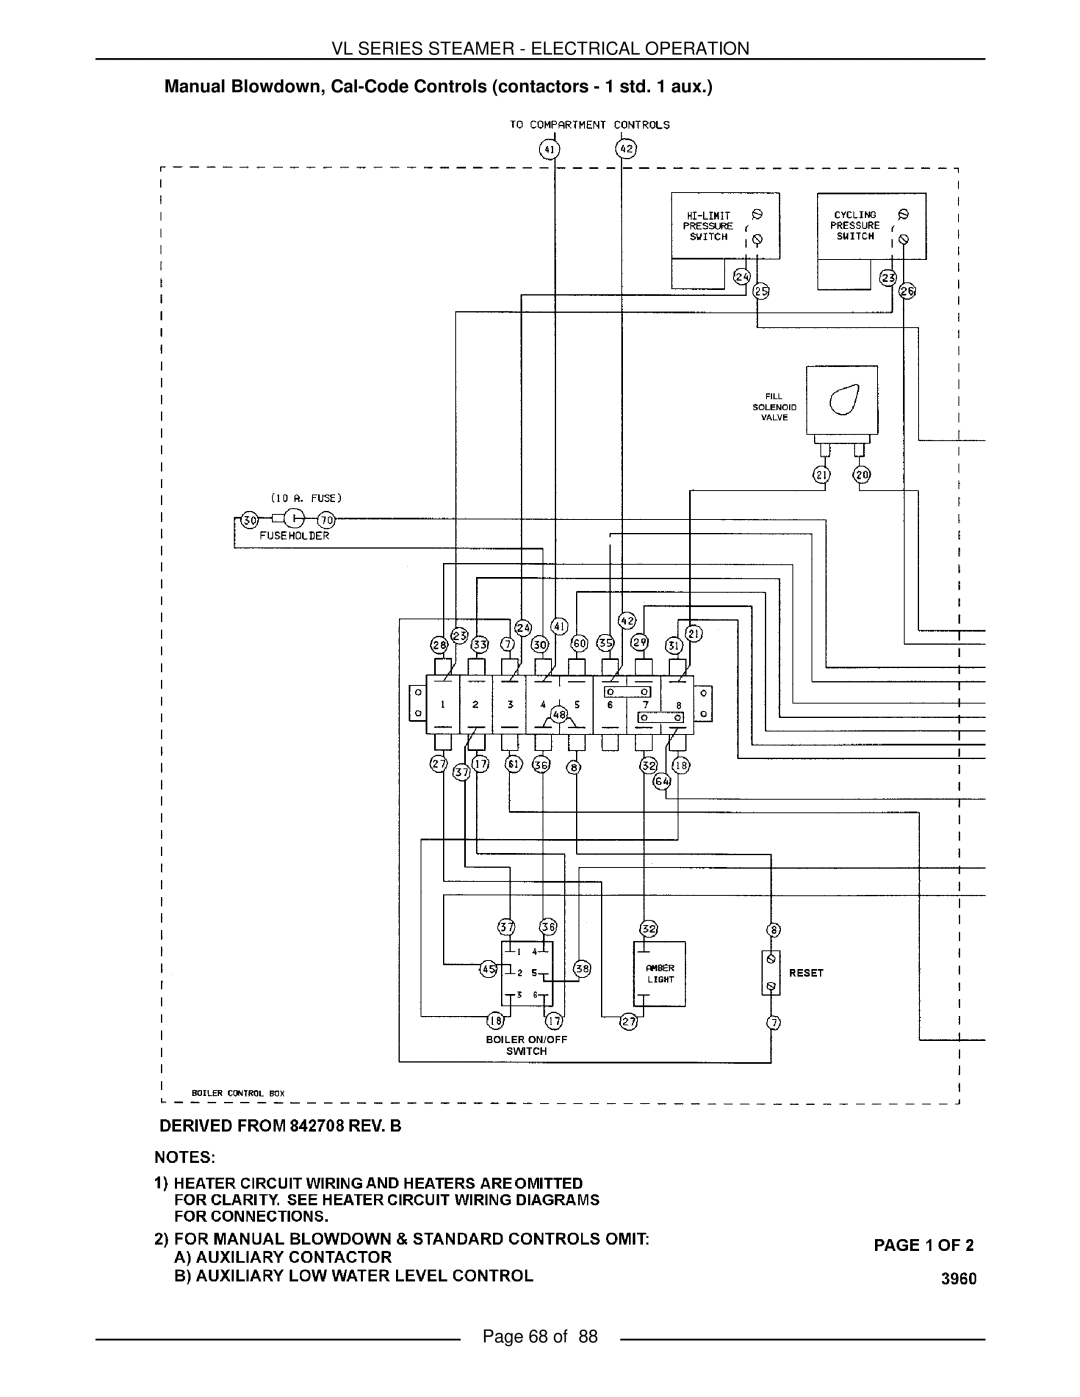 Vulcan-Hart VL2GSS, VL3GMS, VL2GMS, VL3GAS, VL2GAS, VL3GSS, VL3GPS, VL2GPS Vl Series Steamer - Electrical Operation, Page 68 of 